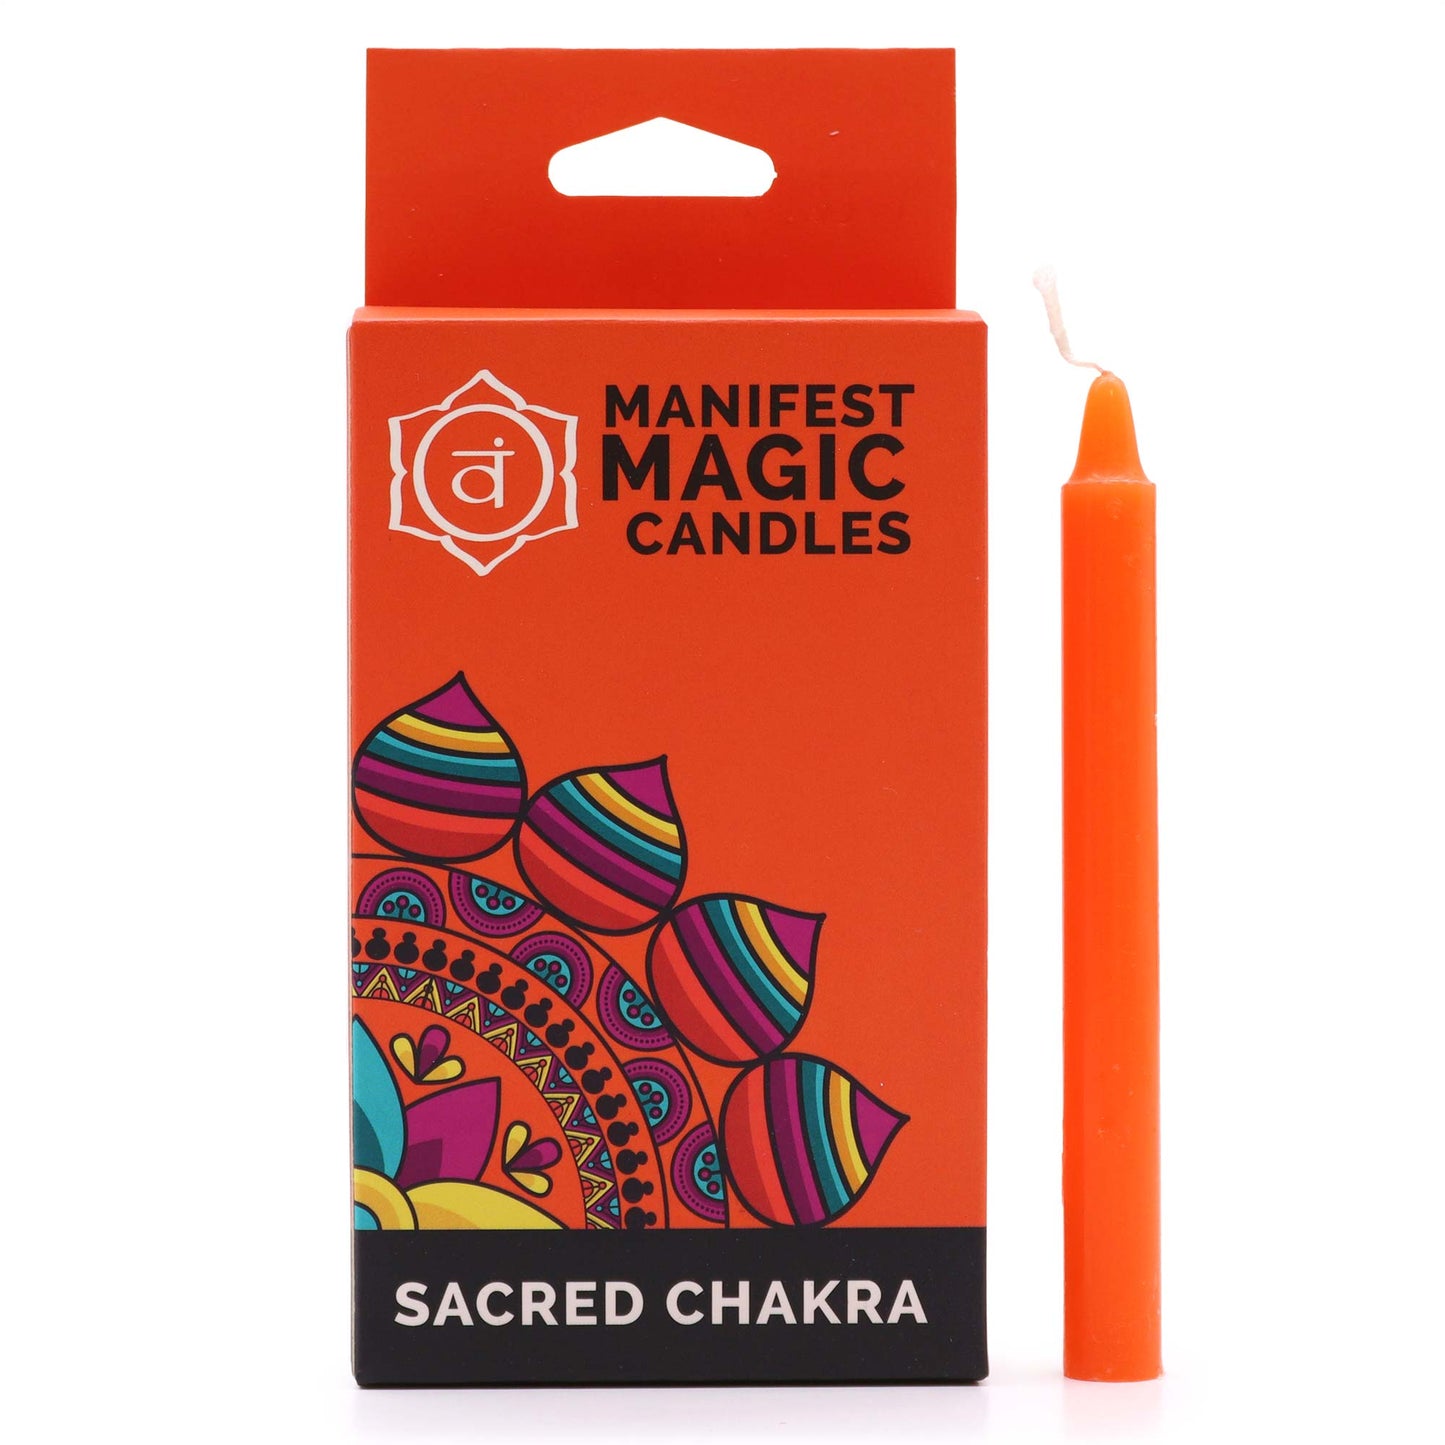 Manifest Magic Candles - Sacred Chakra